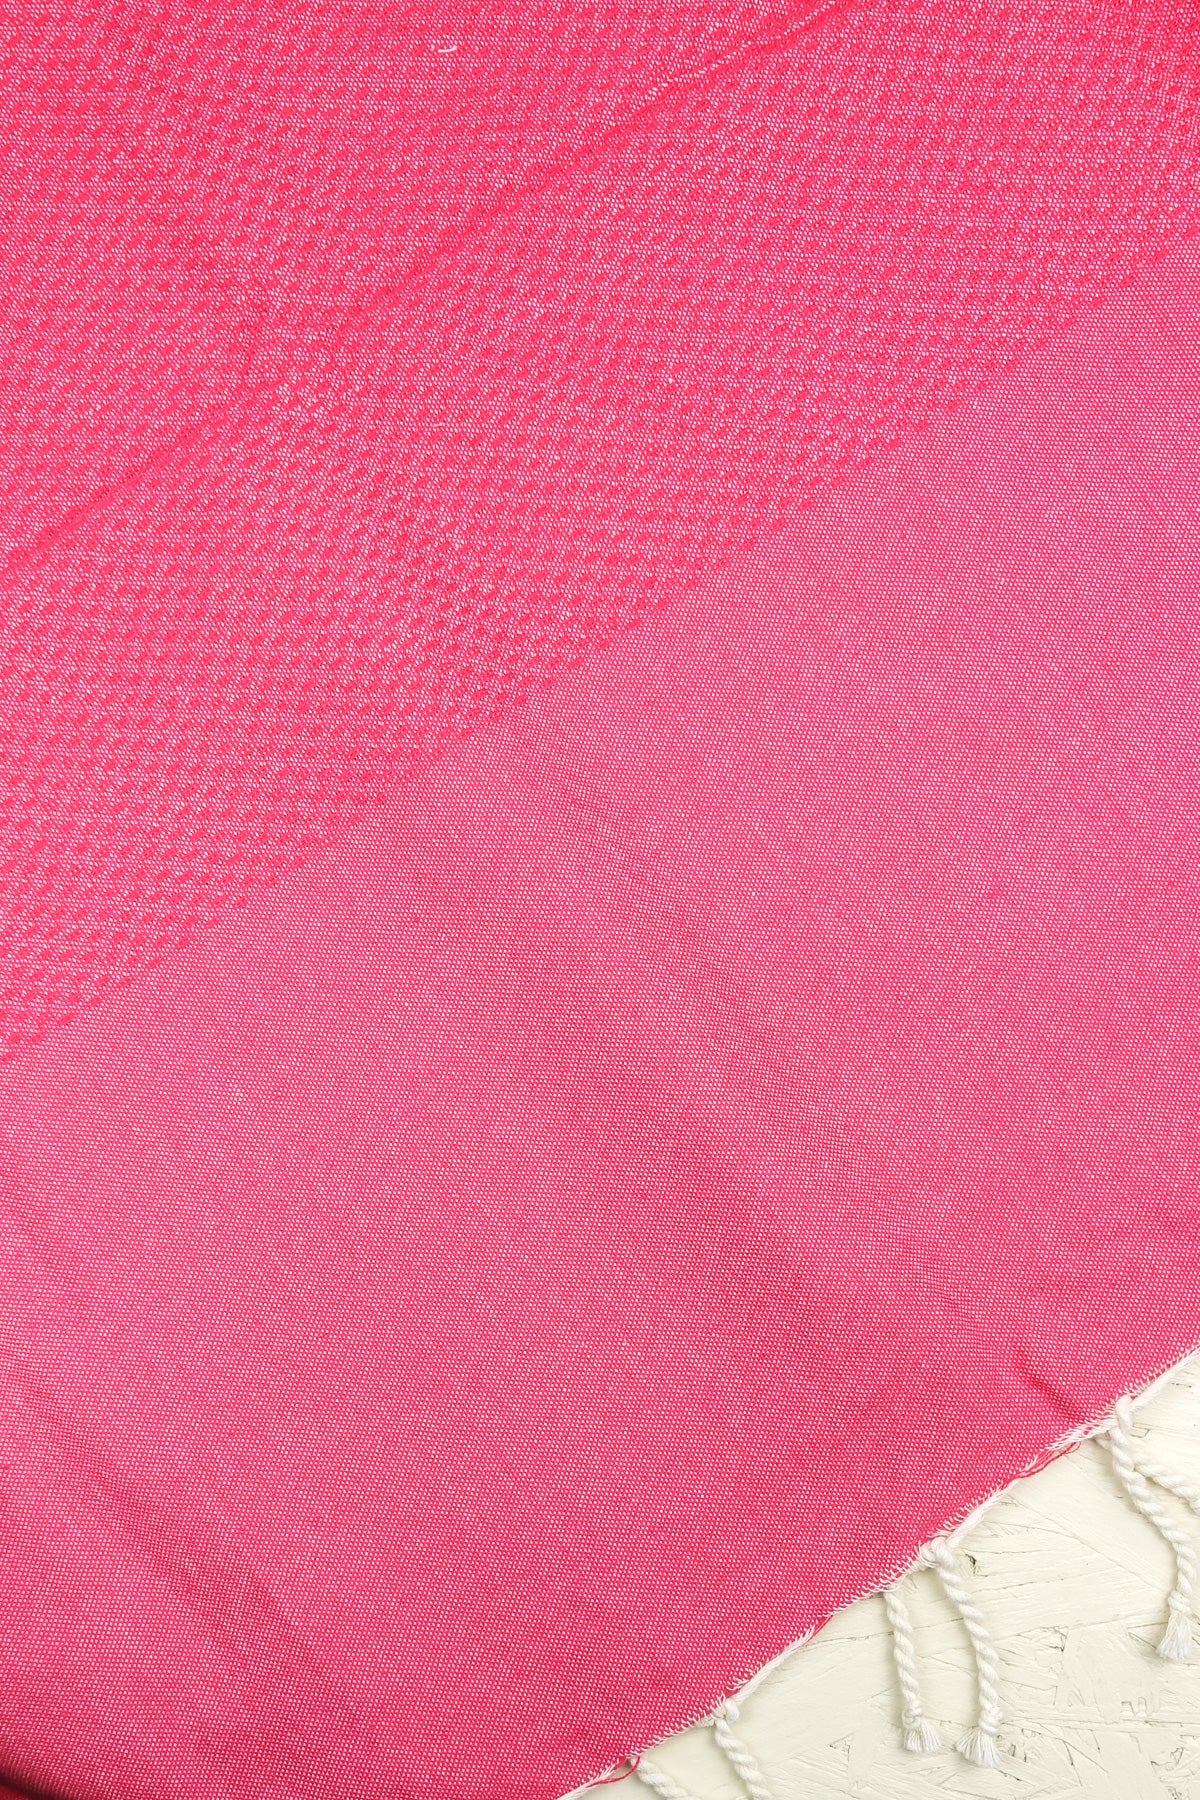 Hamam Blanket honeycomb pink